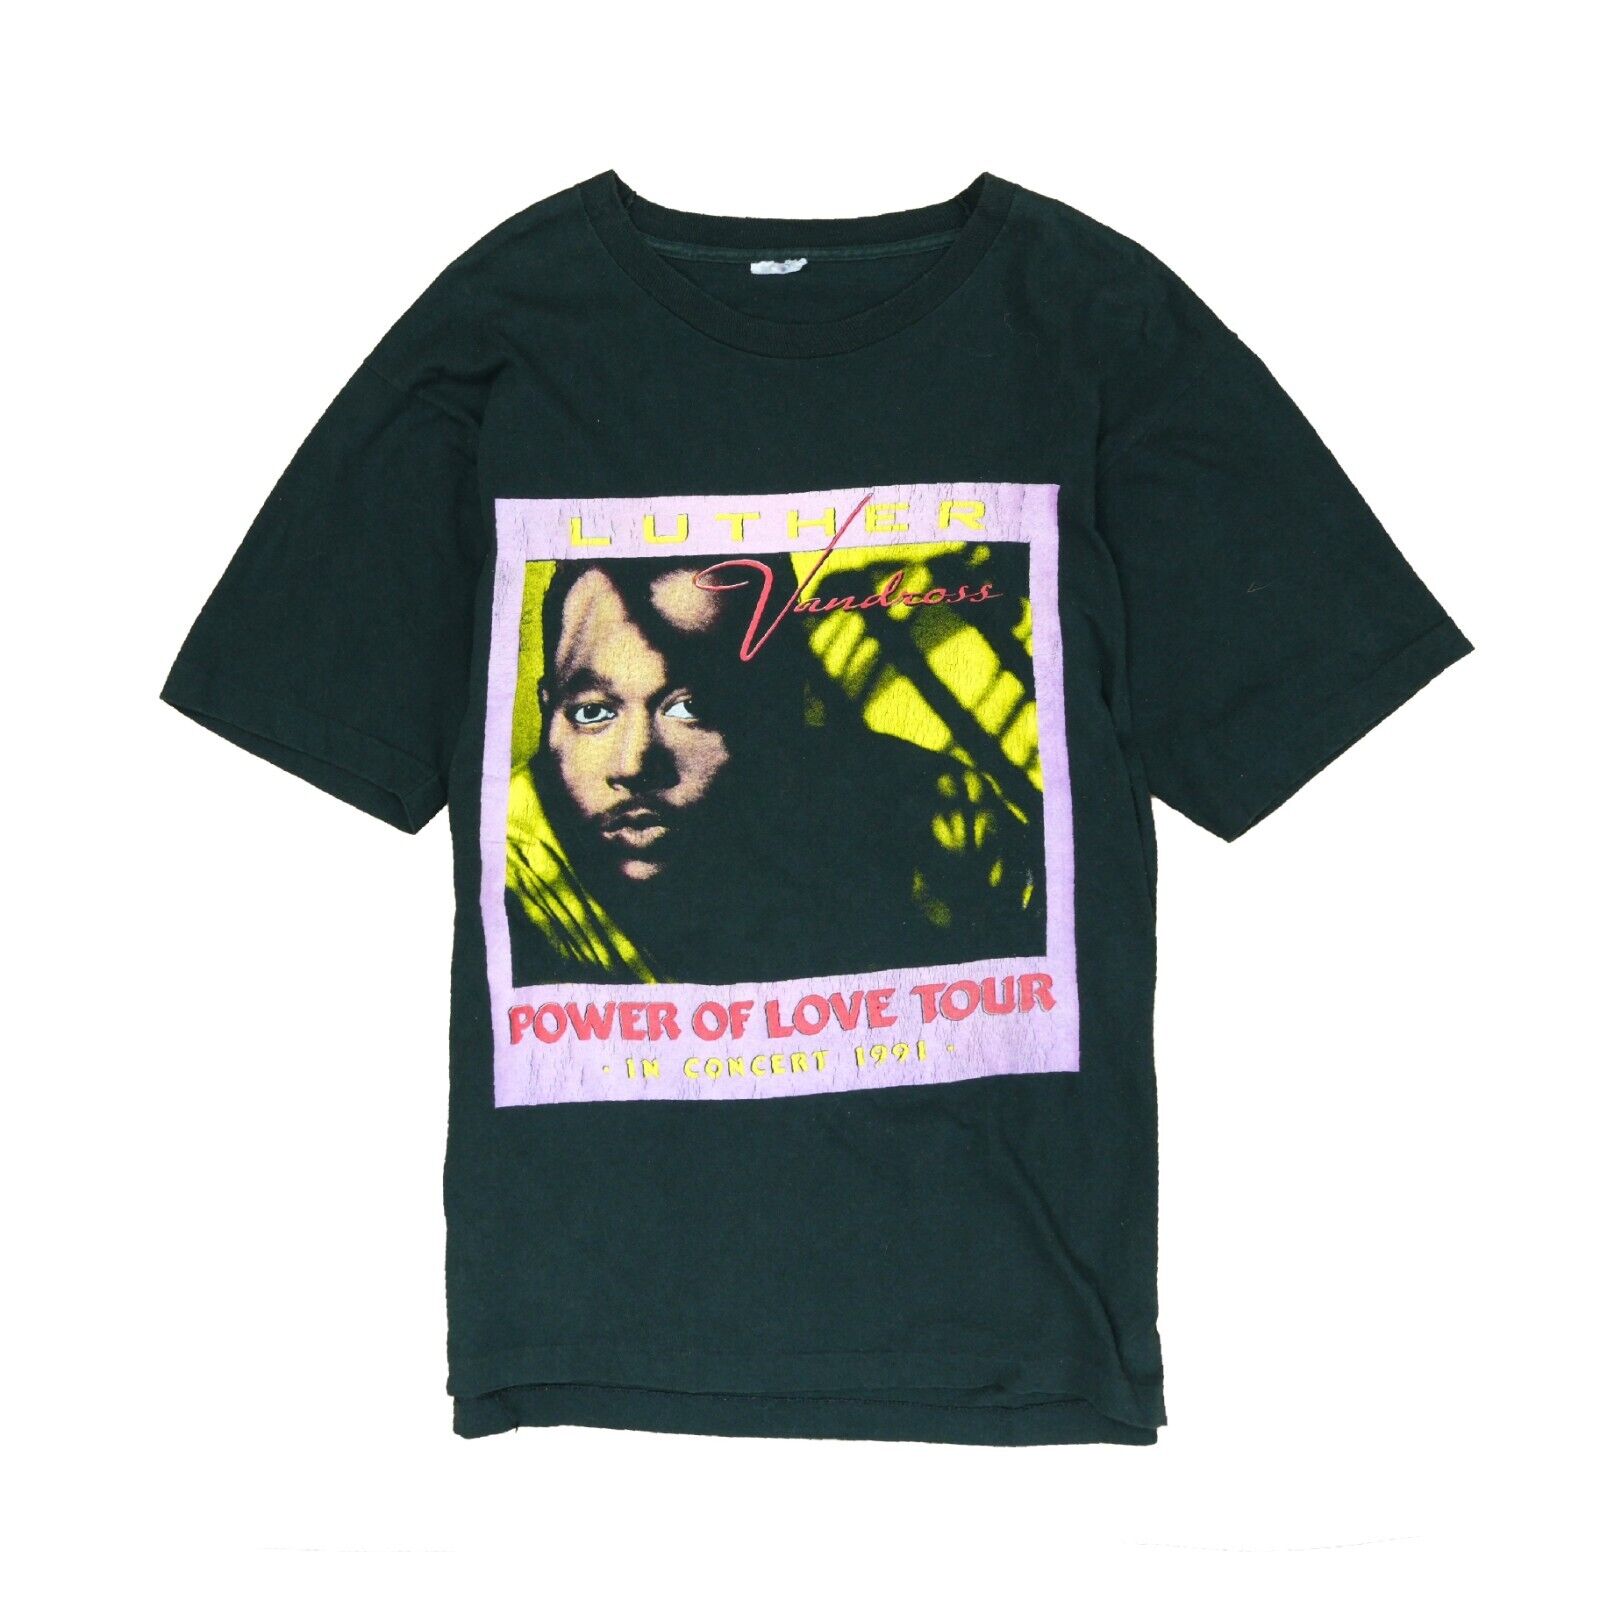 Luther vandross Power of love tour tシャツ - www.sorbillomenu.com